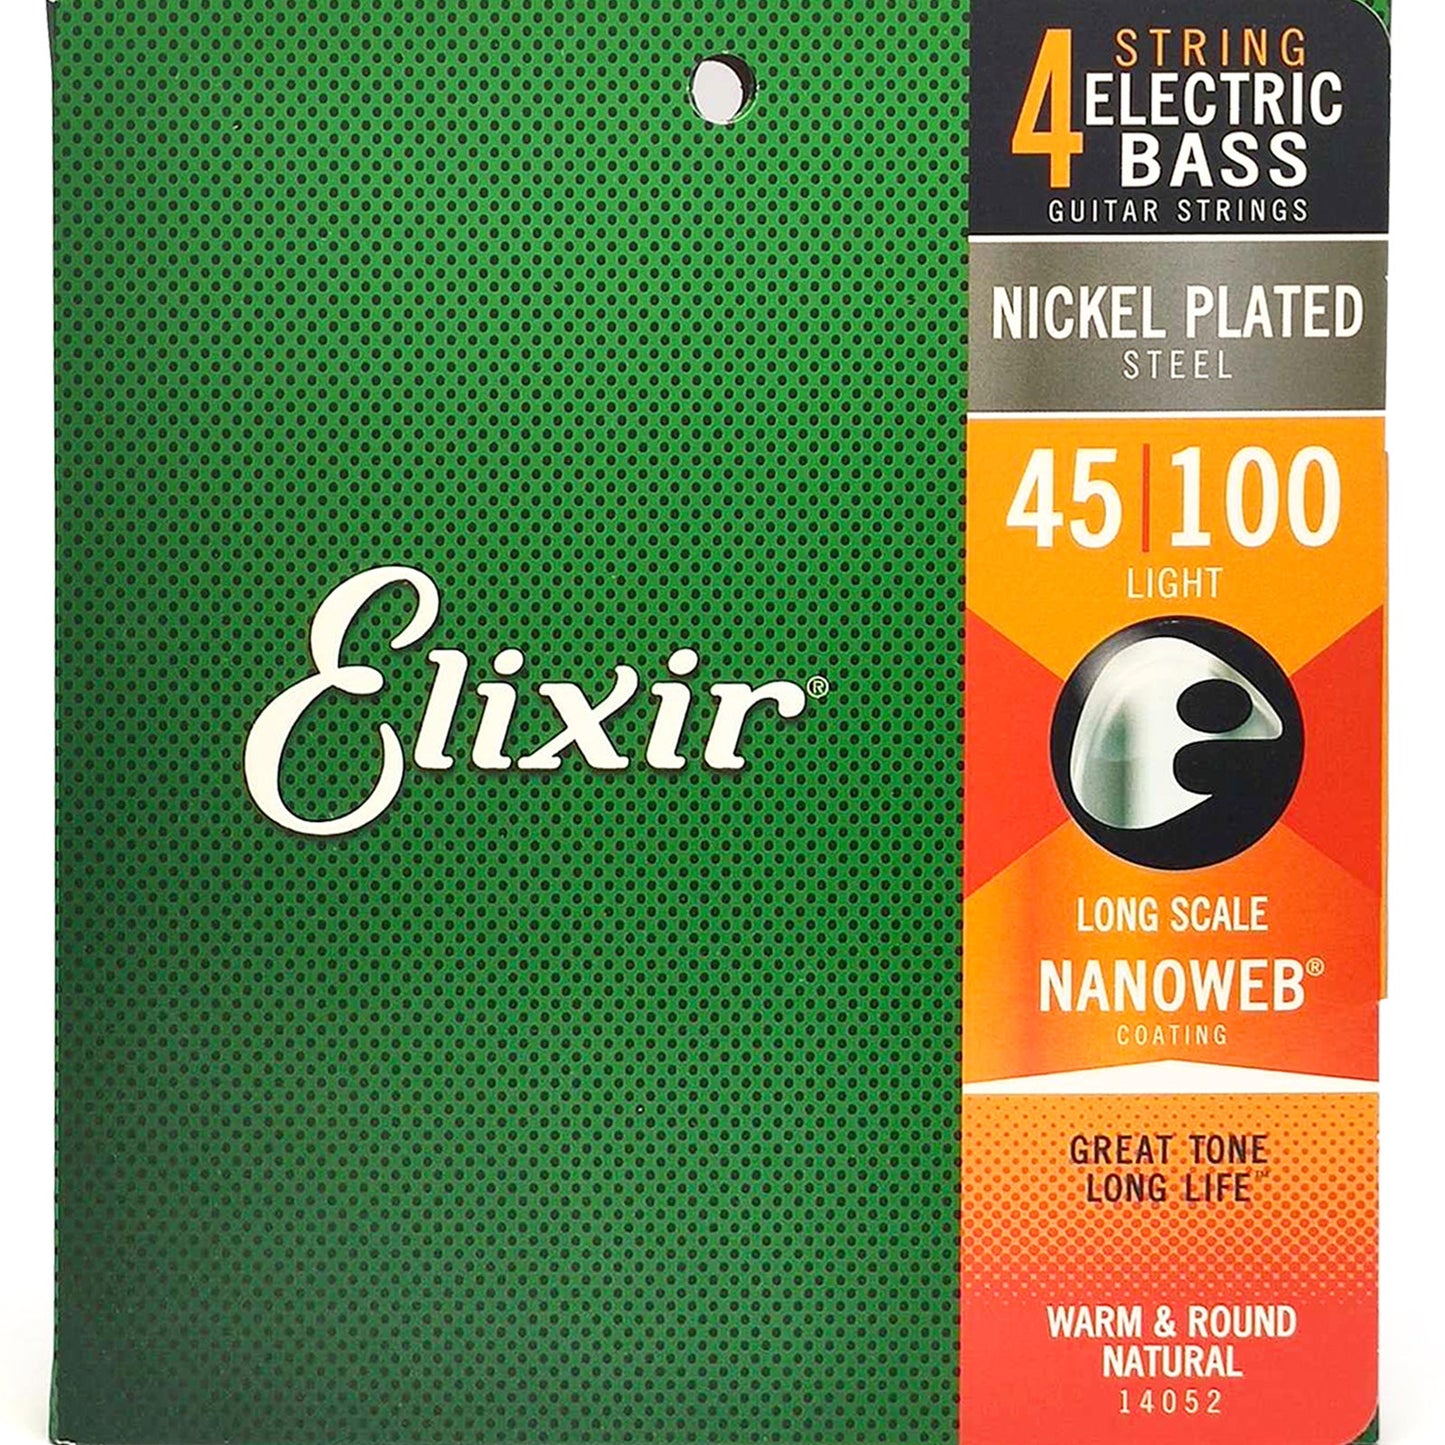 Elixir Electric Bass Nickel Plated Steel Bass Guitar Strings with NANOWEB Coating